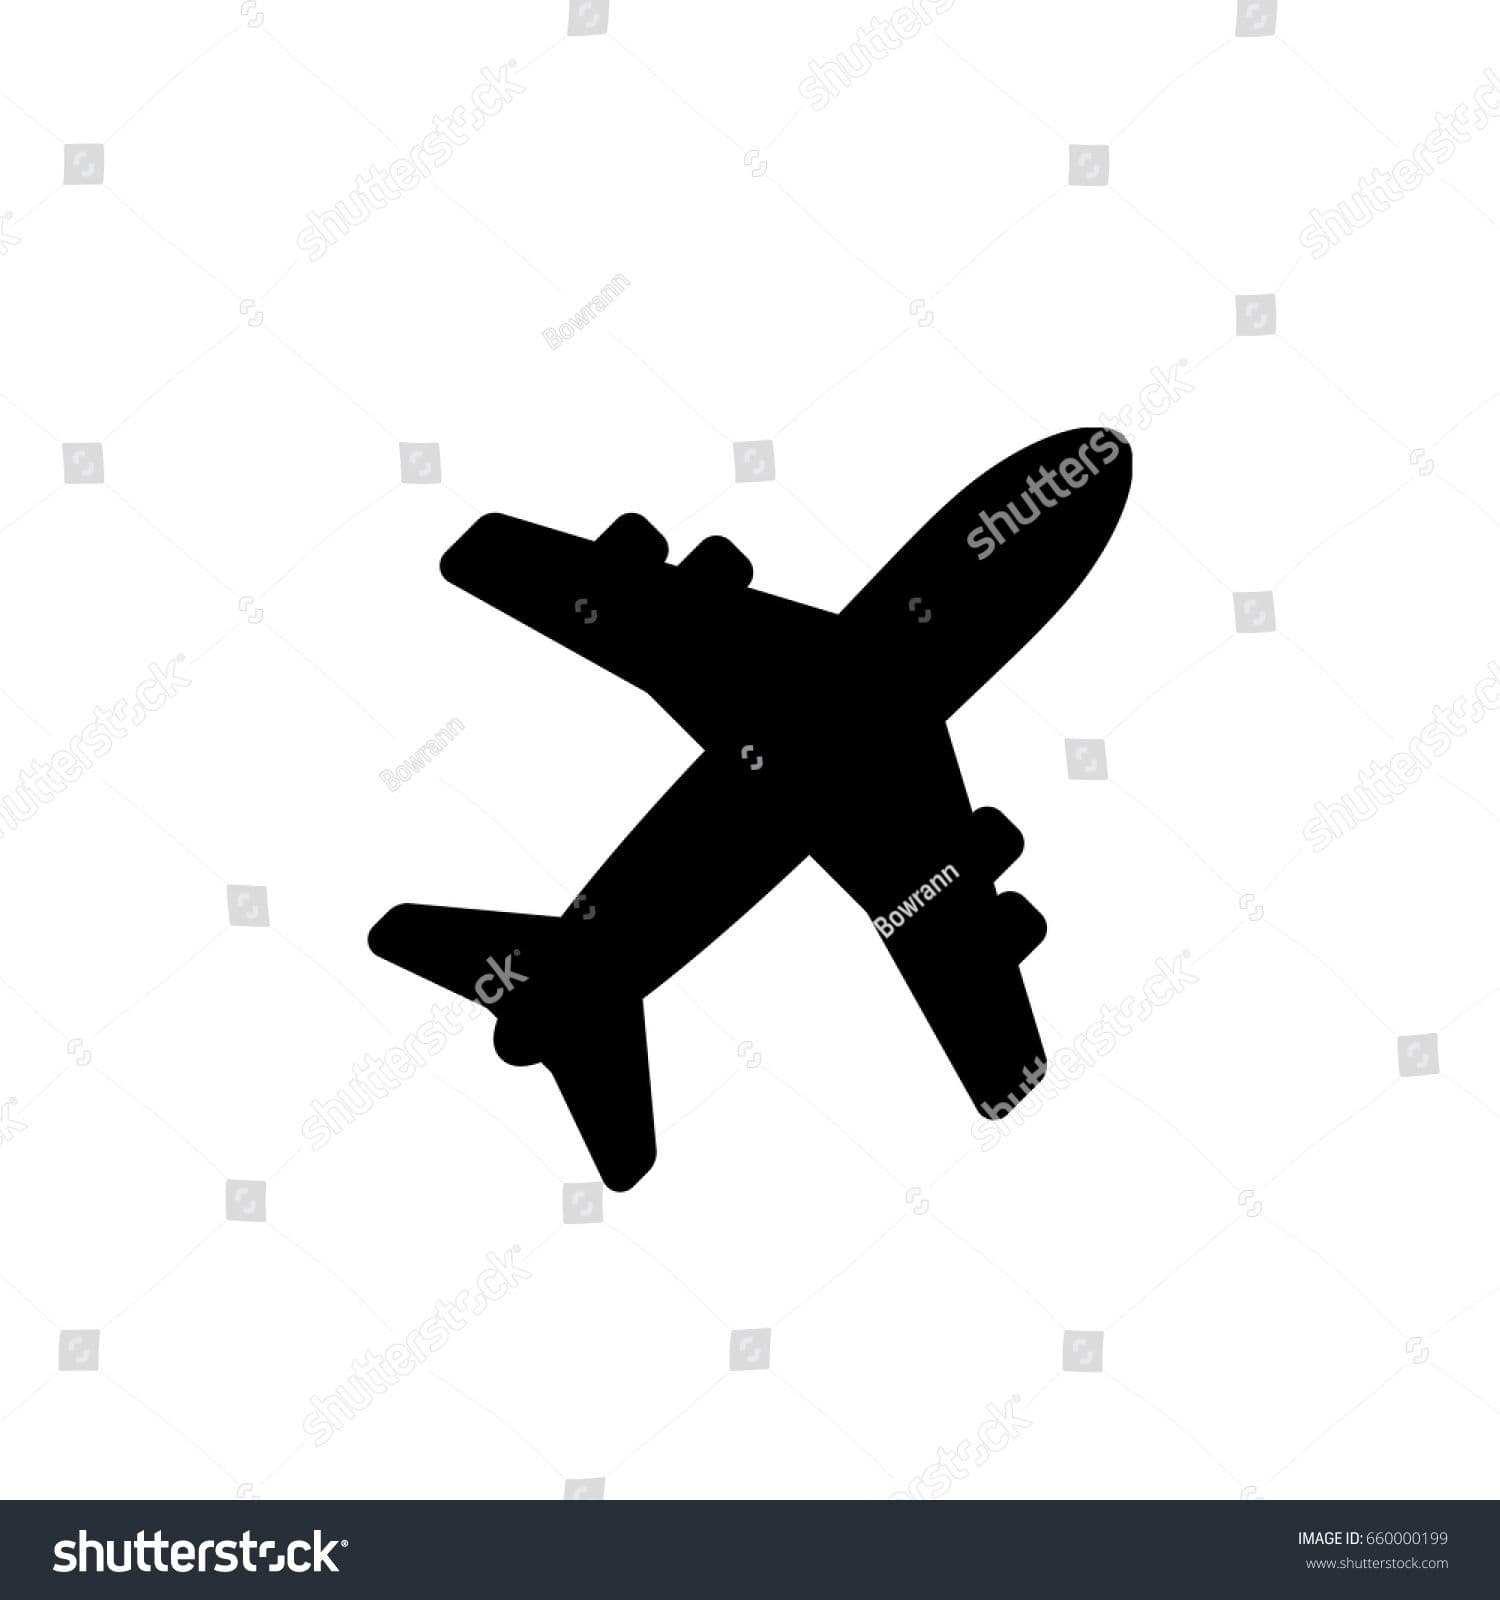 stock-vector-airplane-vector-icon-660000199.jpg